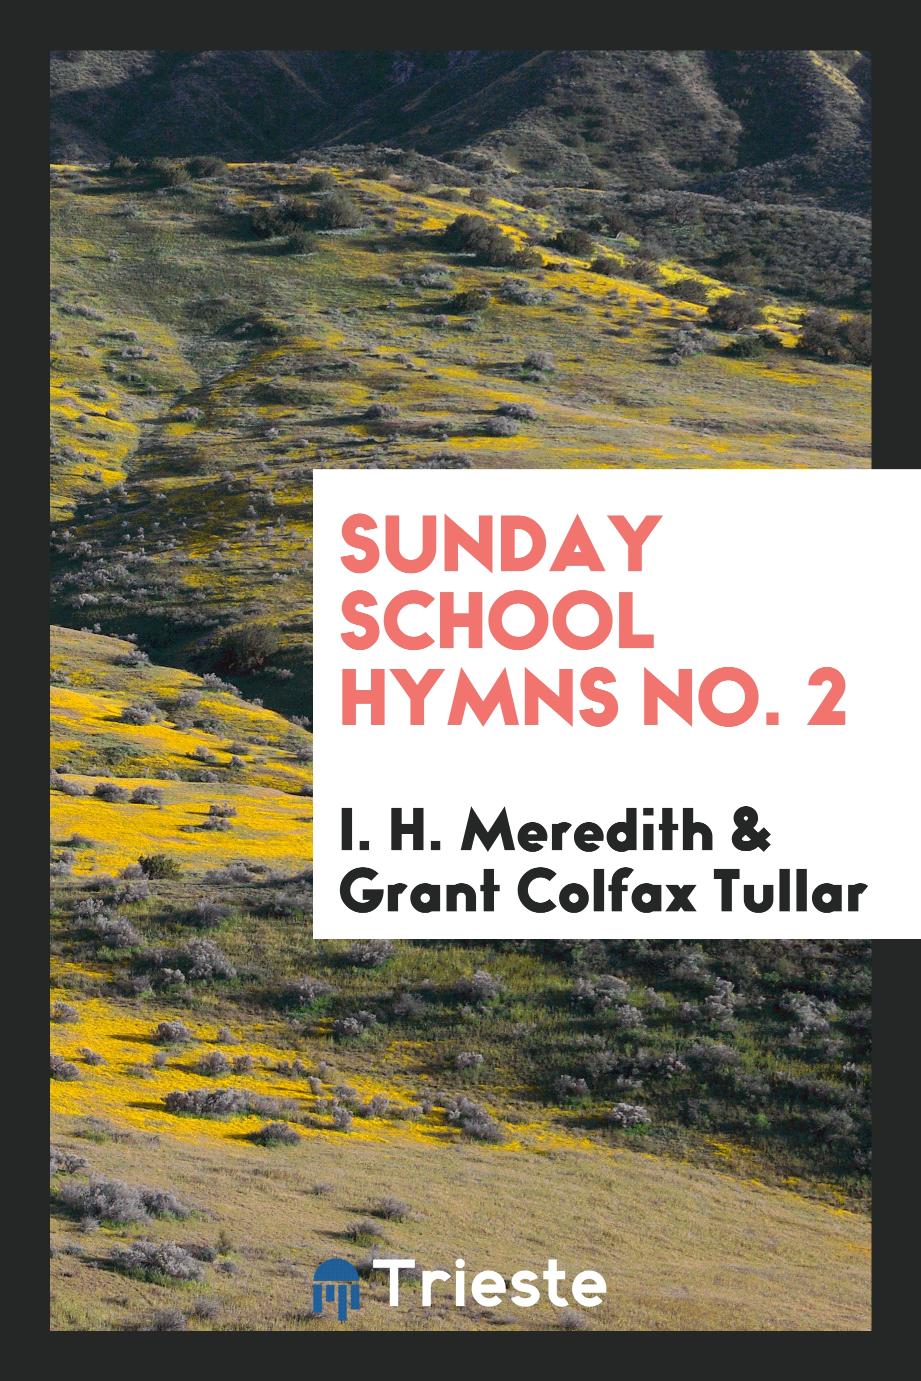 Sunday school hymns No. 2